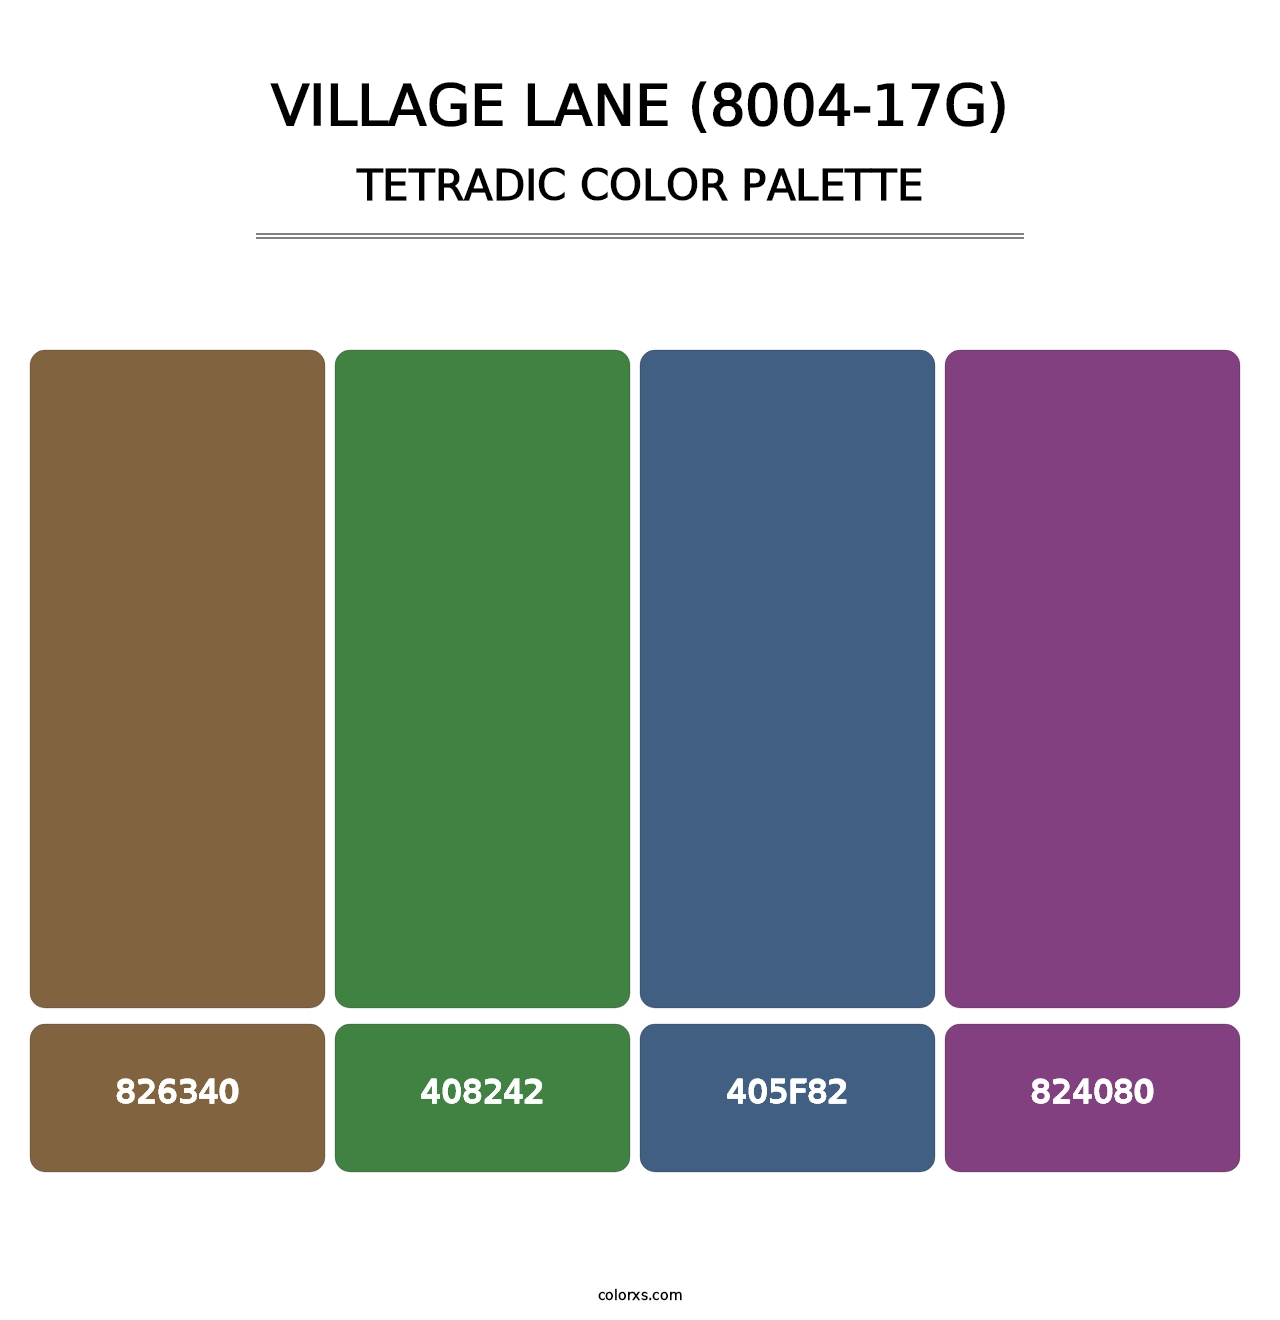 Village Lane (8004-17G) - Tetradic Color Palette